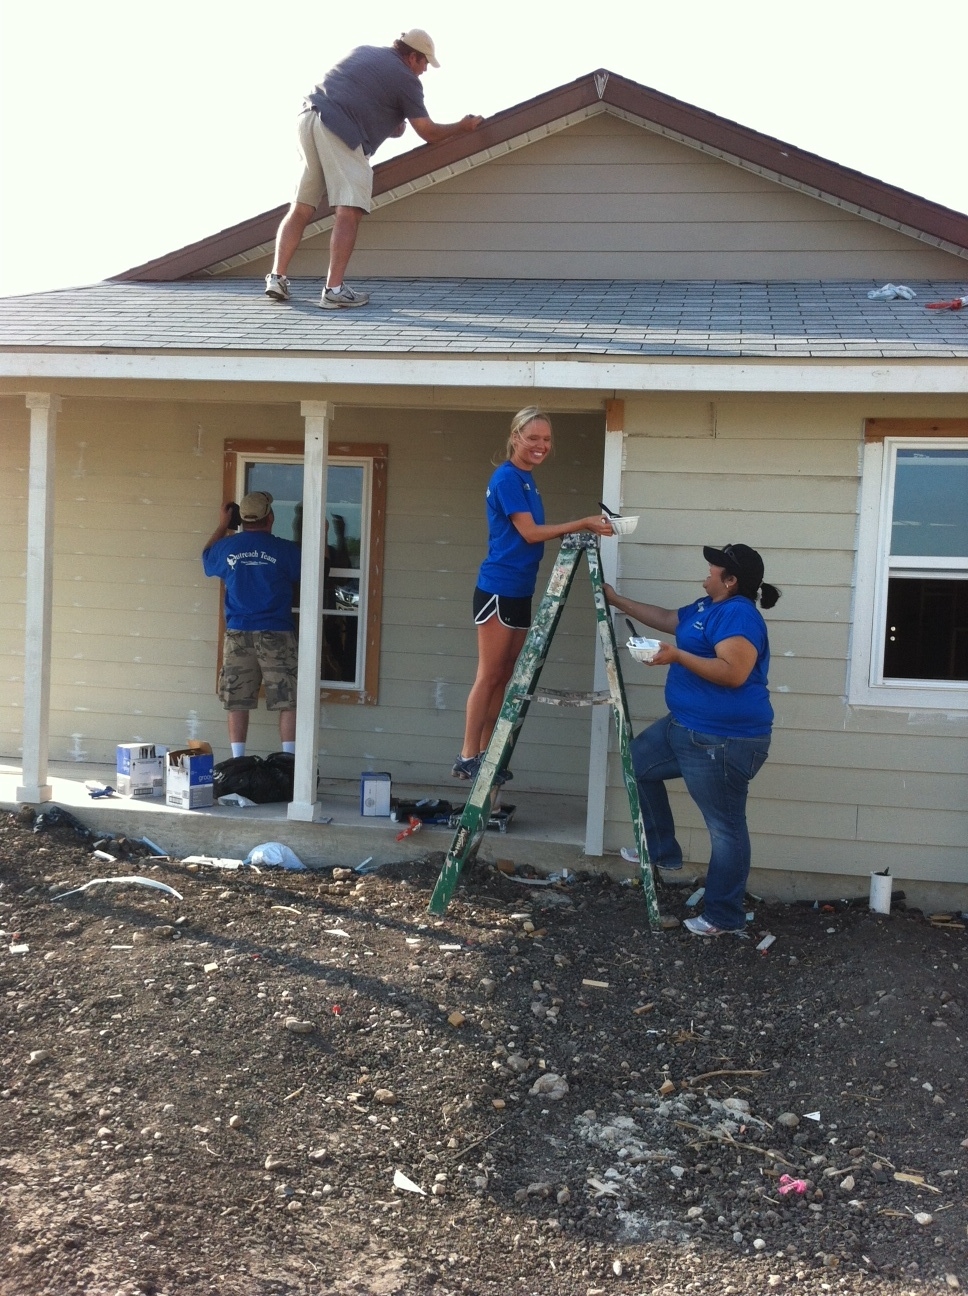 David Weekley Homes Team Members in San Antonio building a Habitat for Humanity home!